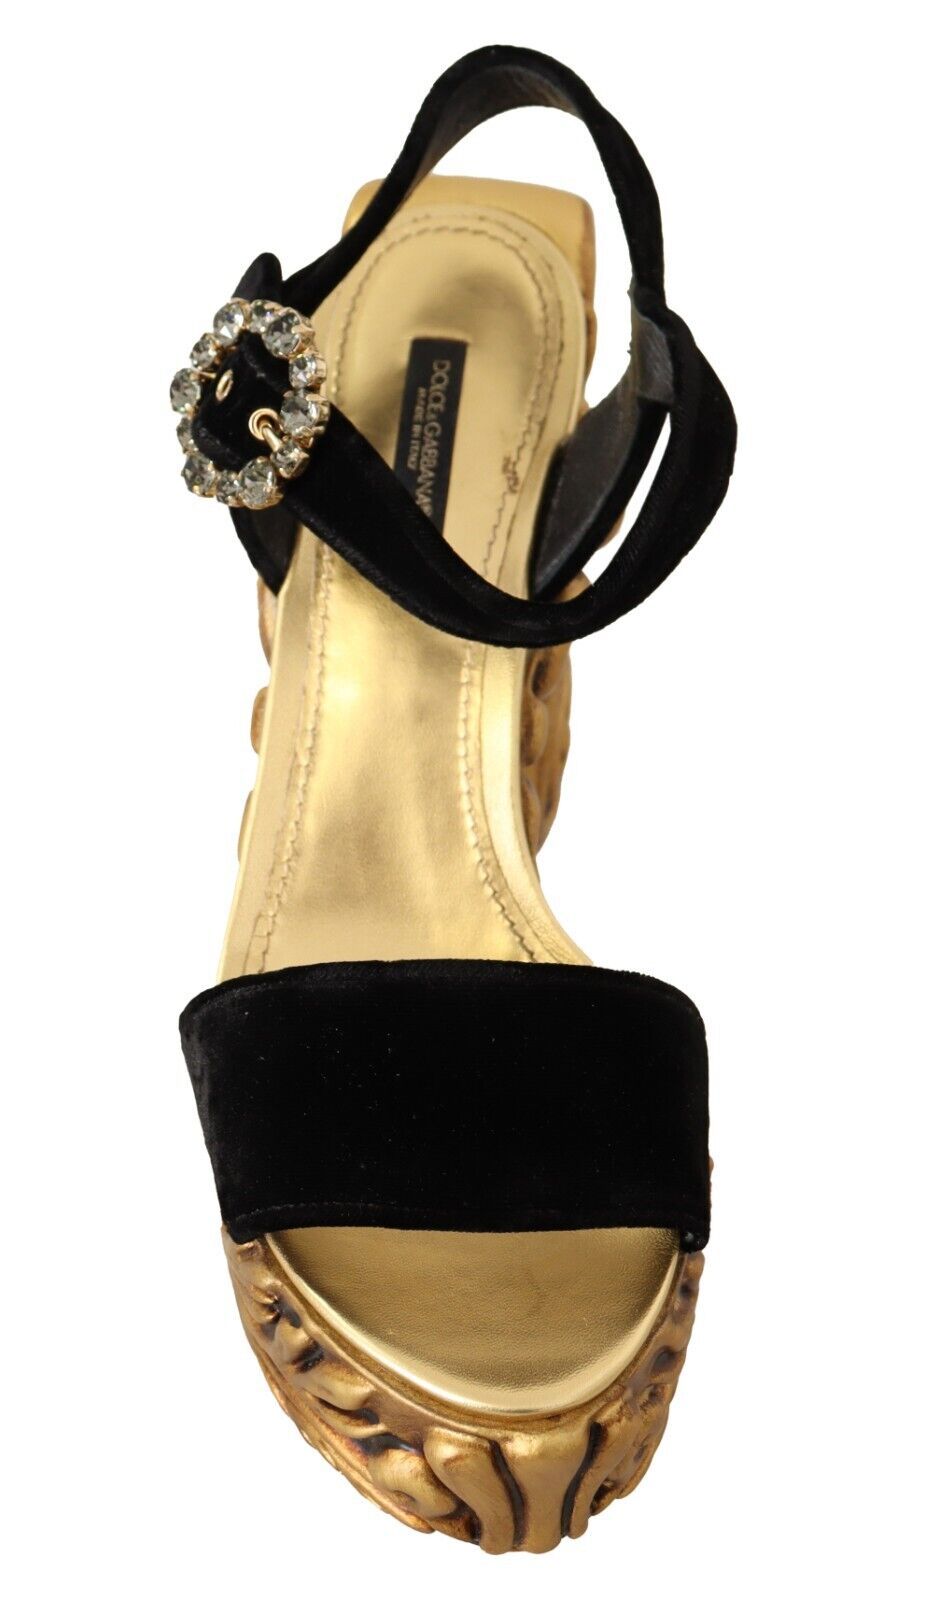 Dolce & Gabbana Baroque Velvet Heels in Black and Gold